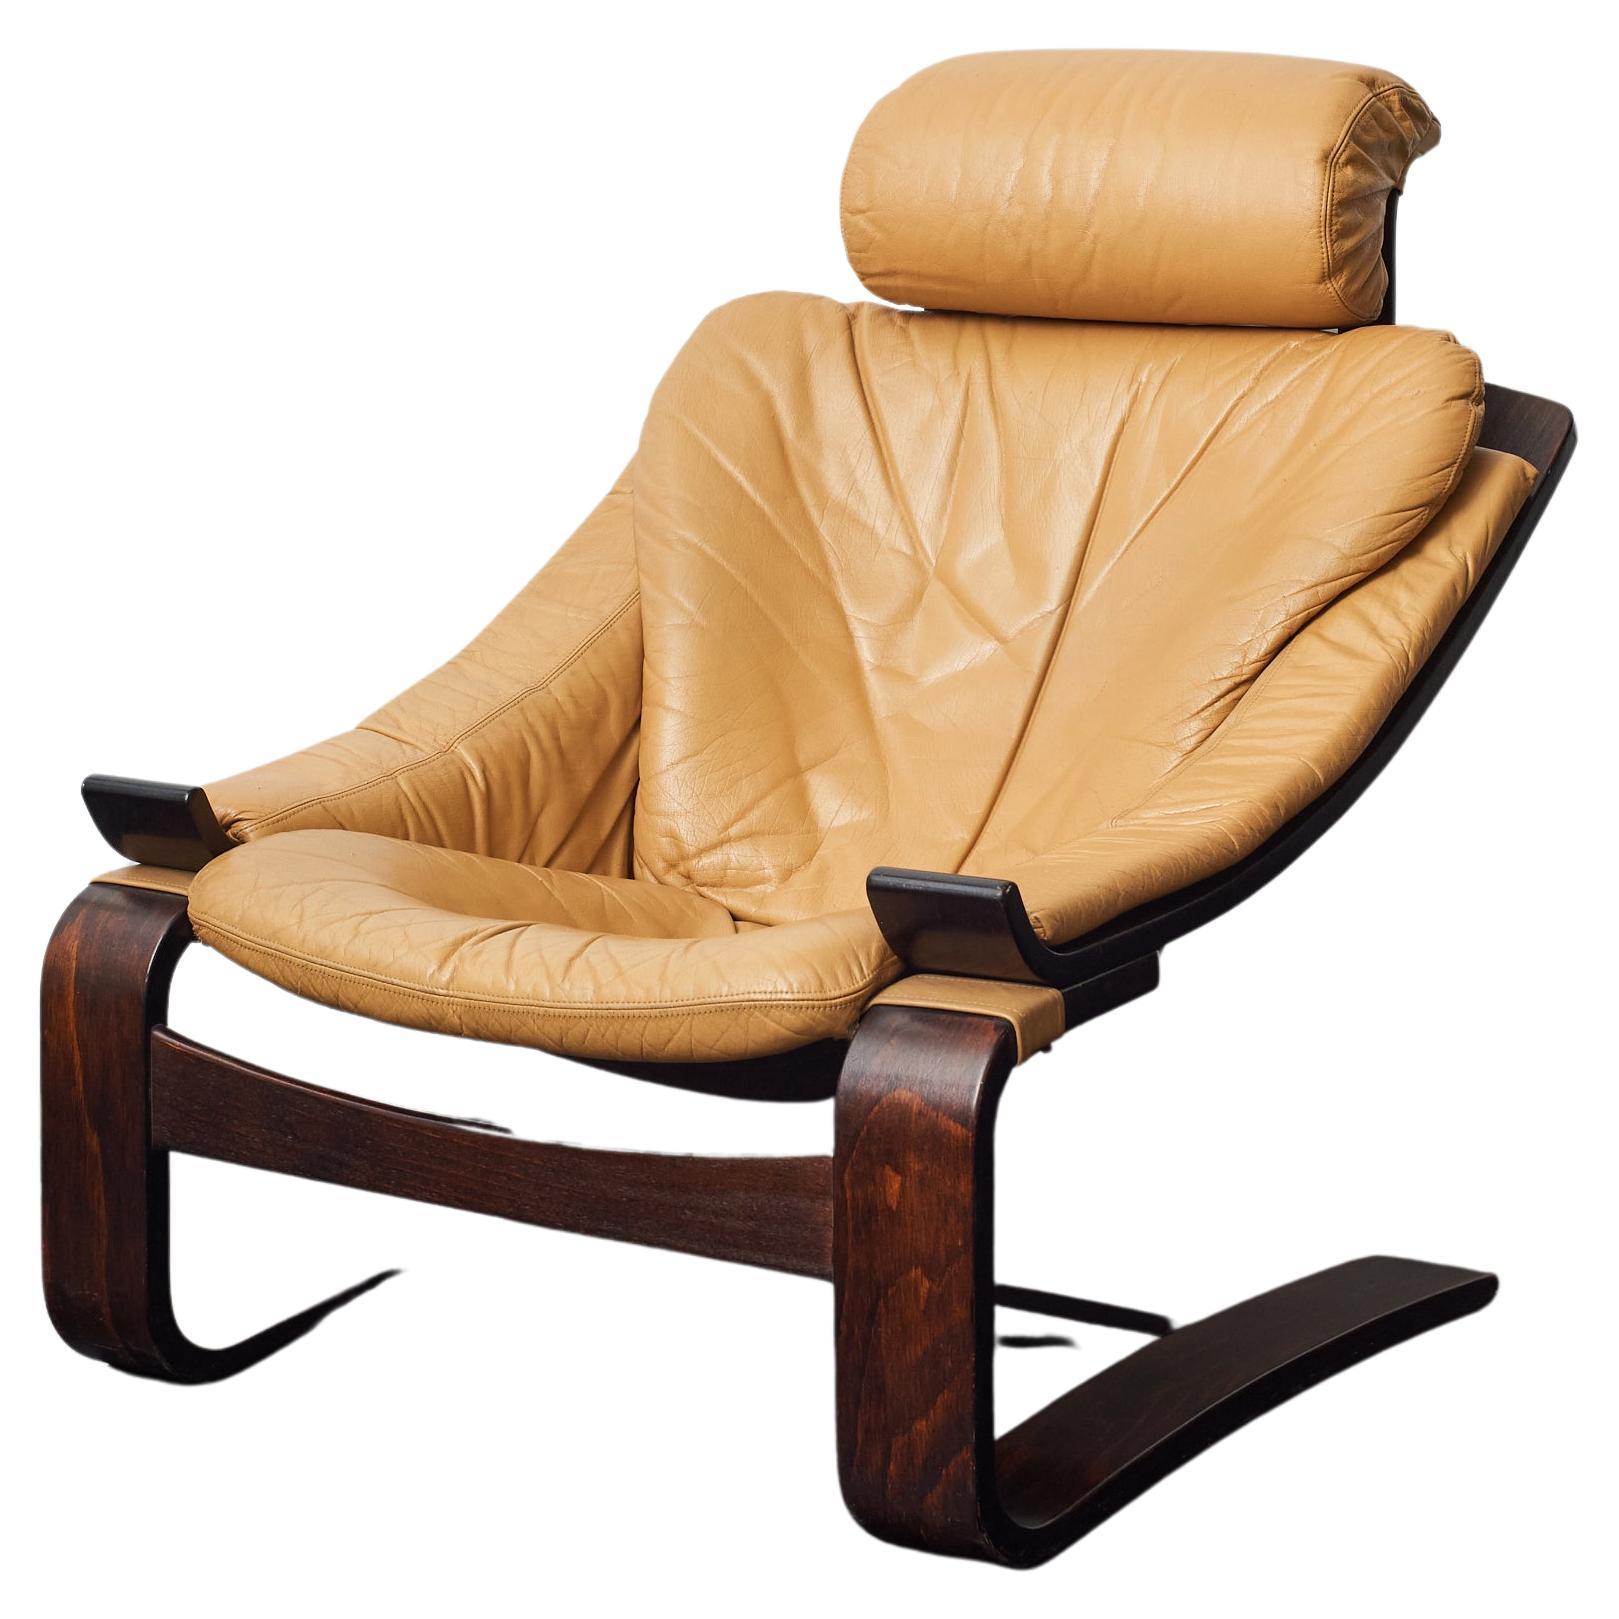 Leather ‘Kroken’ Lounge Chair Designed by Ake Fribytter, Sweden, 1974